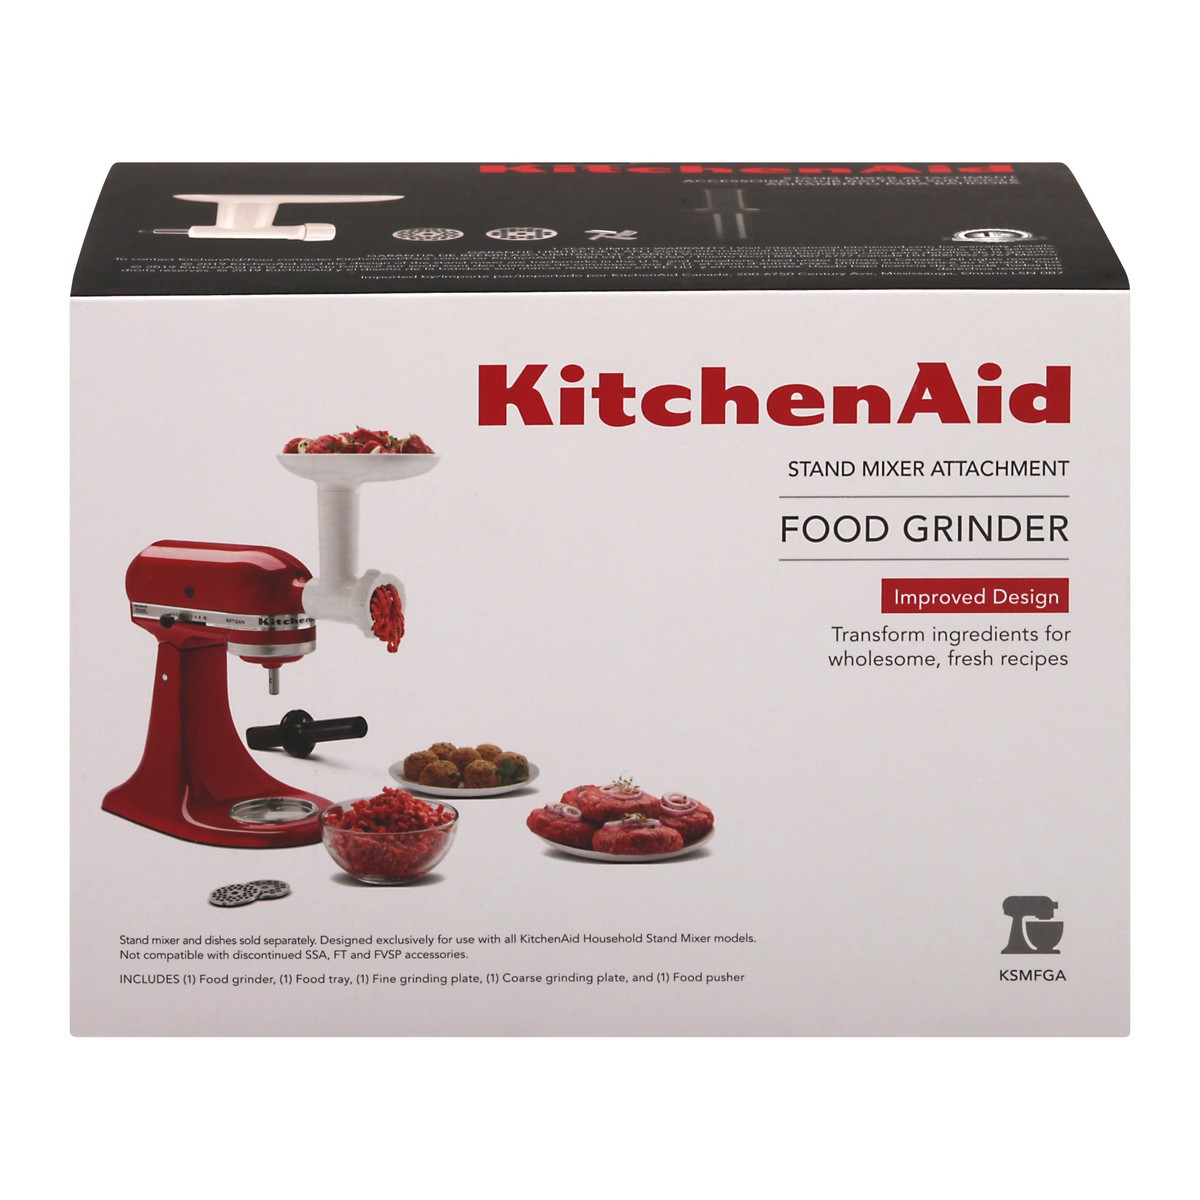 KitchenAid Food Grinder Attachment for Stand Mixer, KSMFGA at